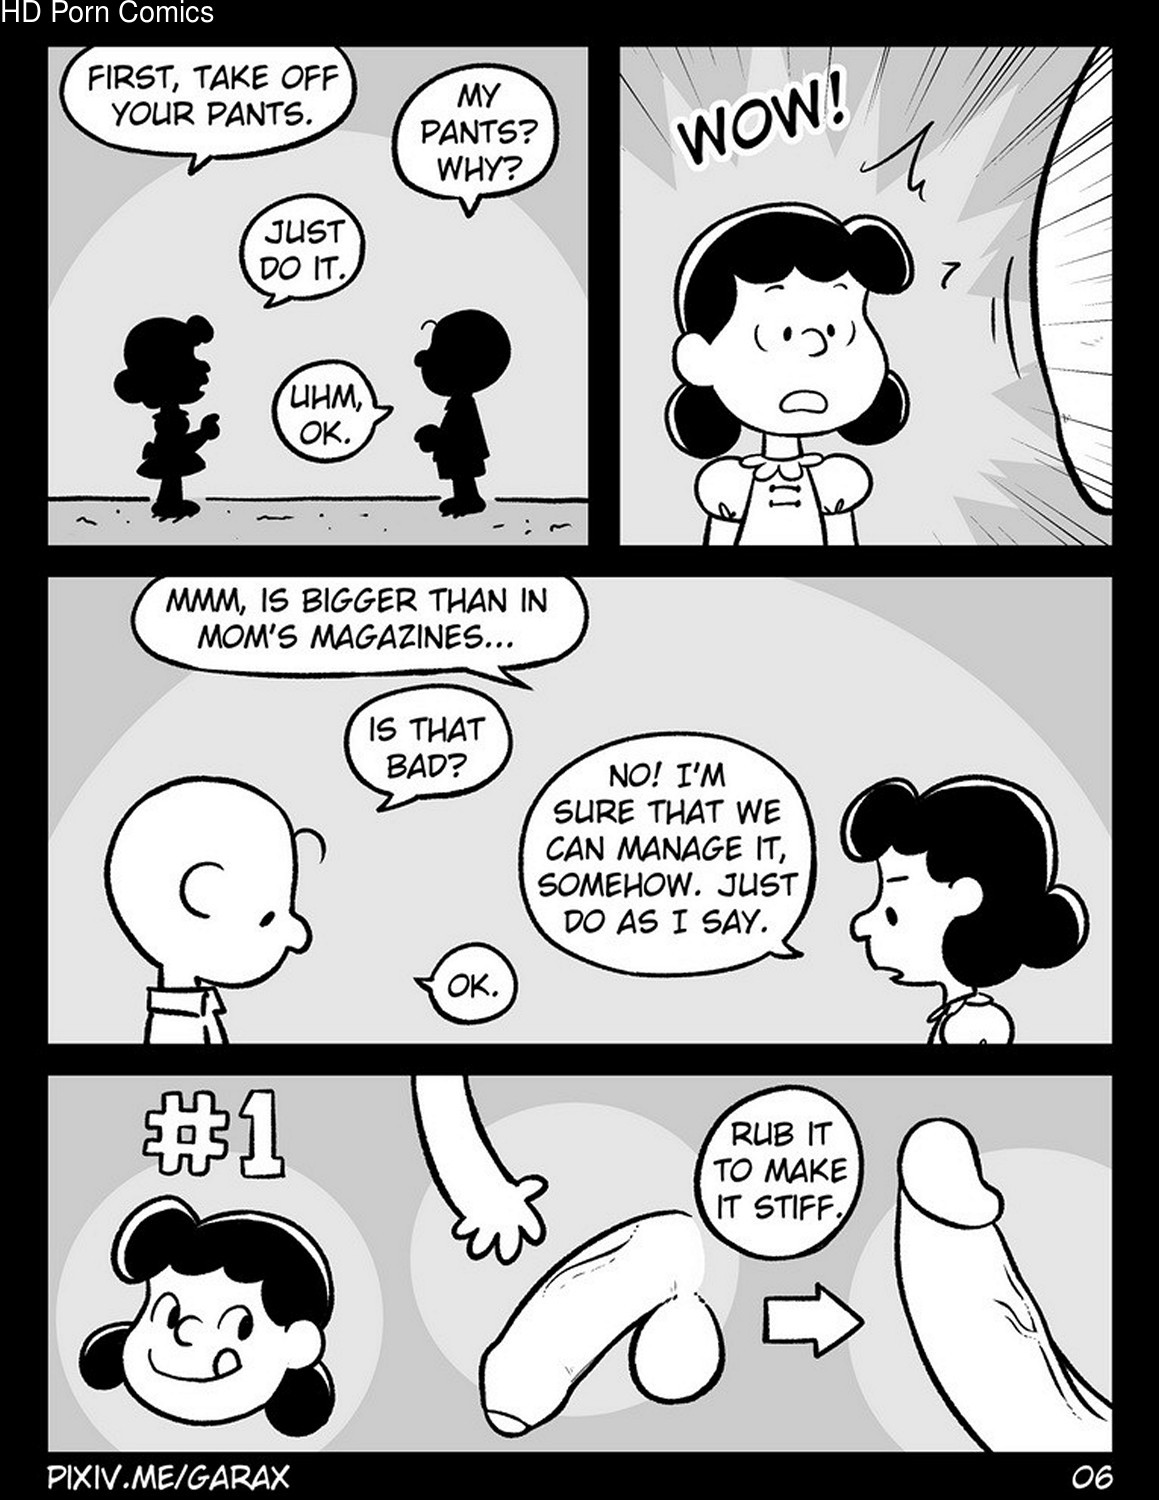 1159px x 1500px - You Are A -Sister- Blockhead Fucker Charlie Brown 2 comic porn - HD Porn  Comics